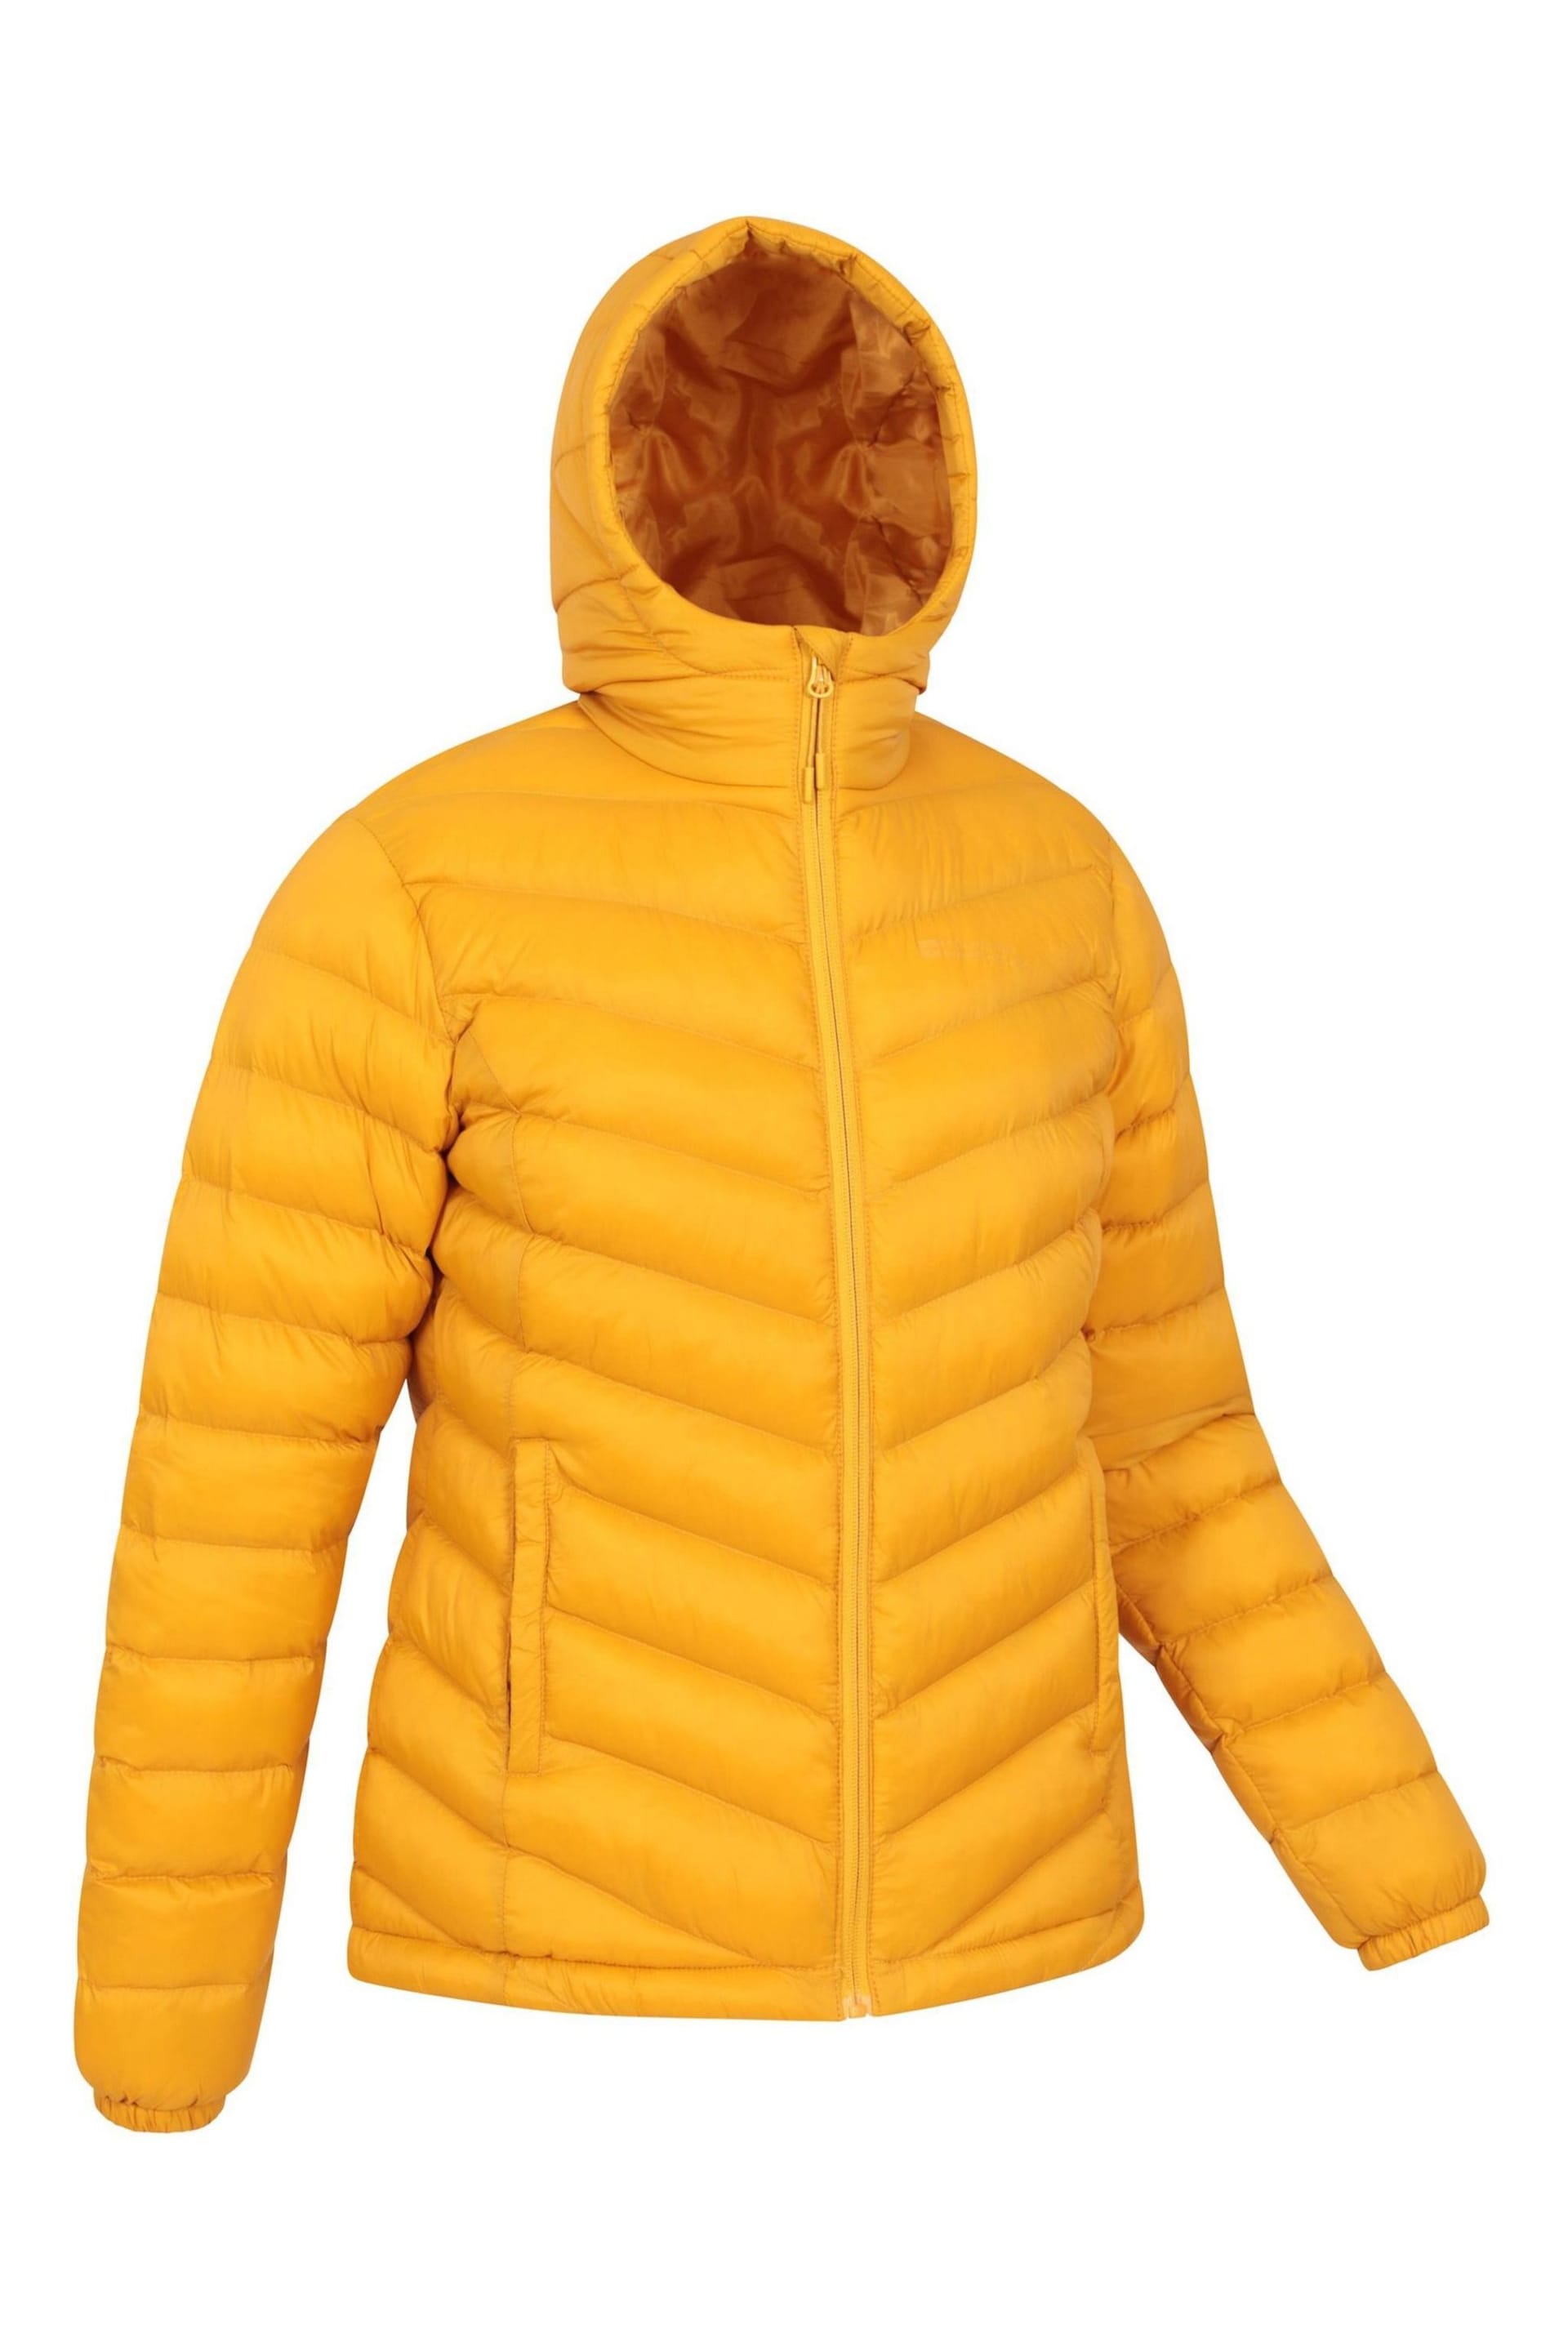 Mountain Warehouse Yellow Womens Seasons Water Resistant Padded Jacket - Image 5 of 7